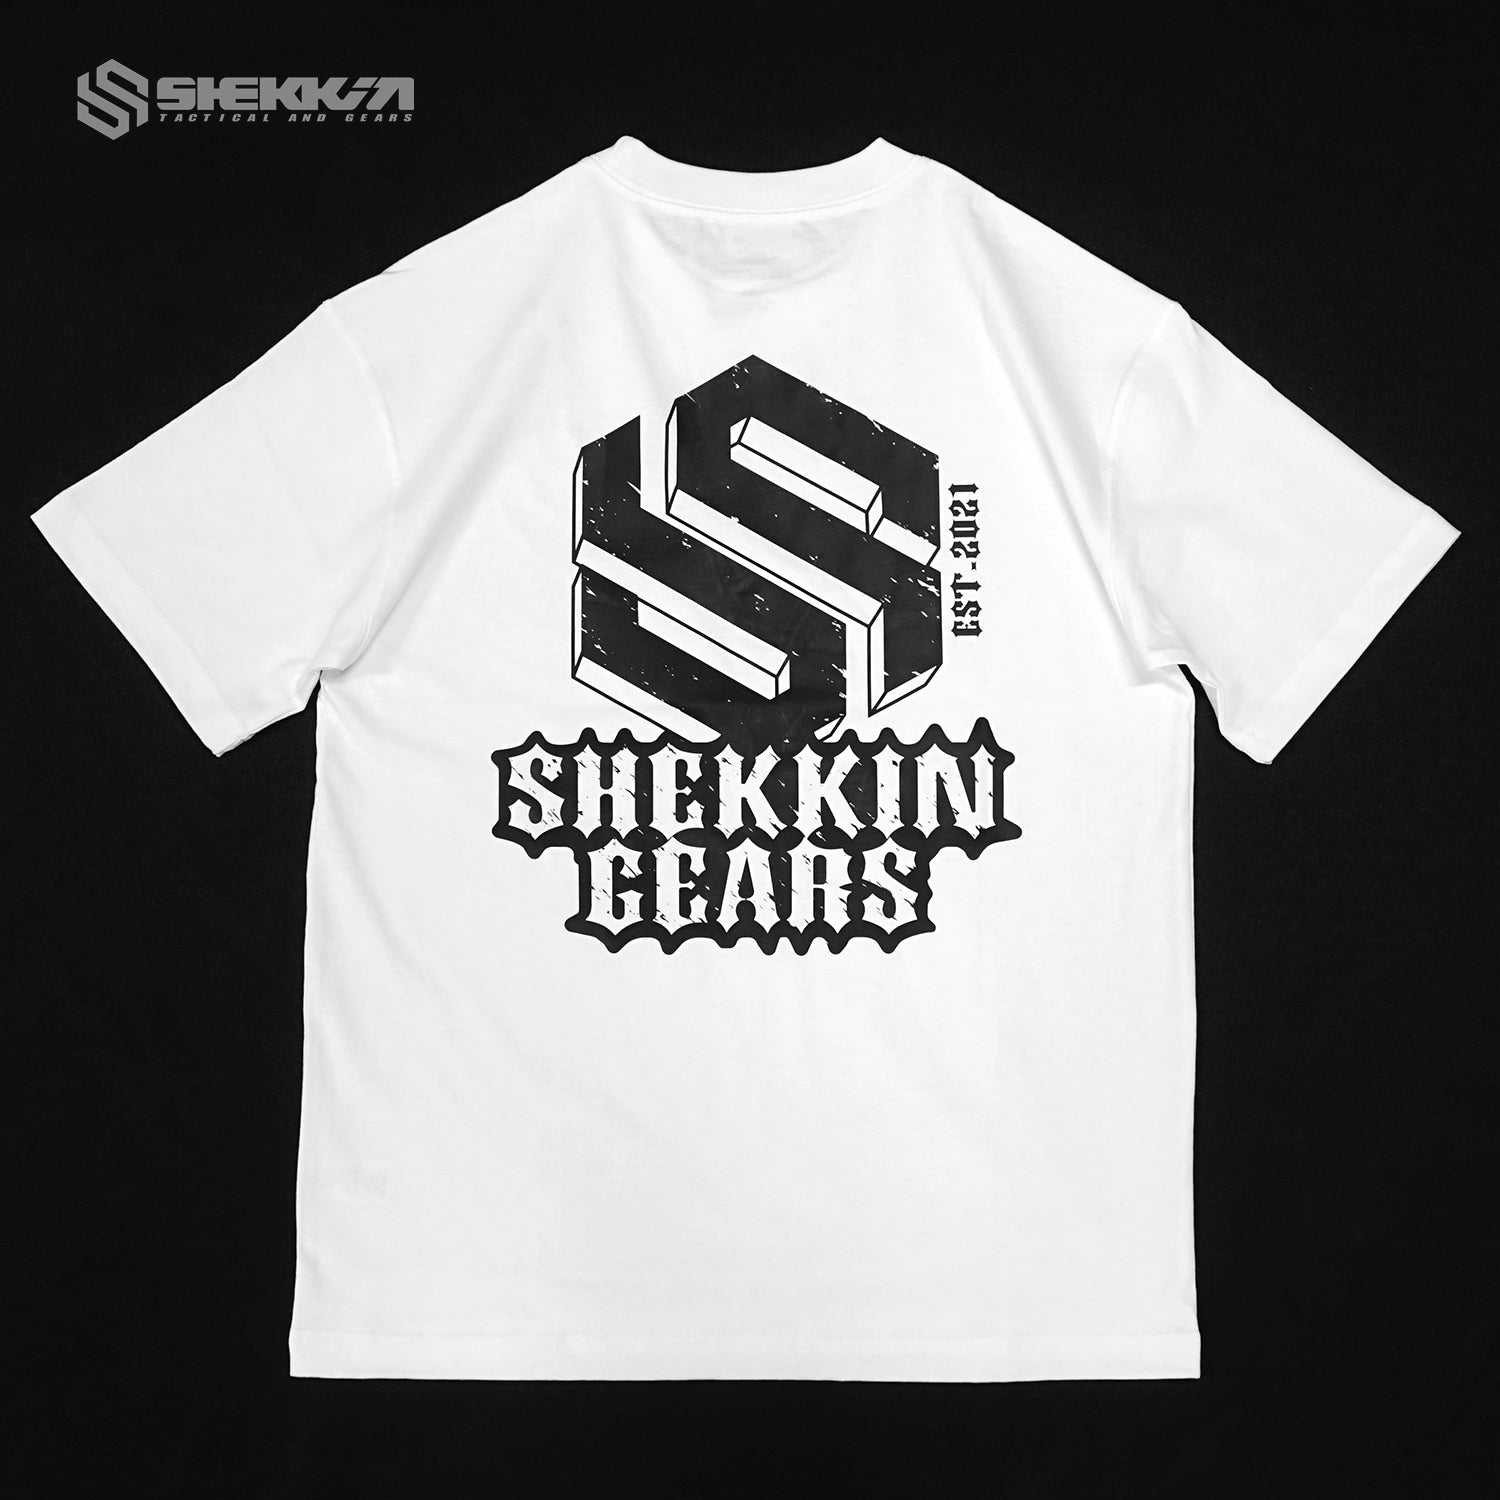 Shekkin Gears T-shirt